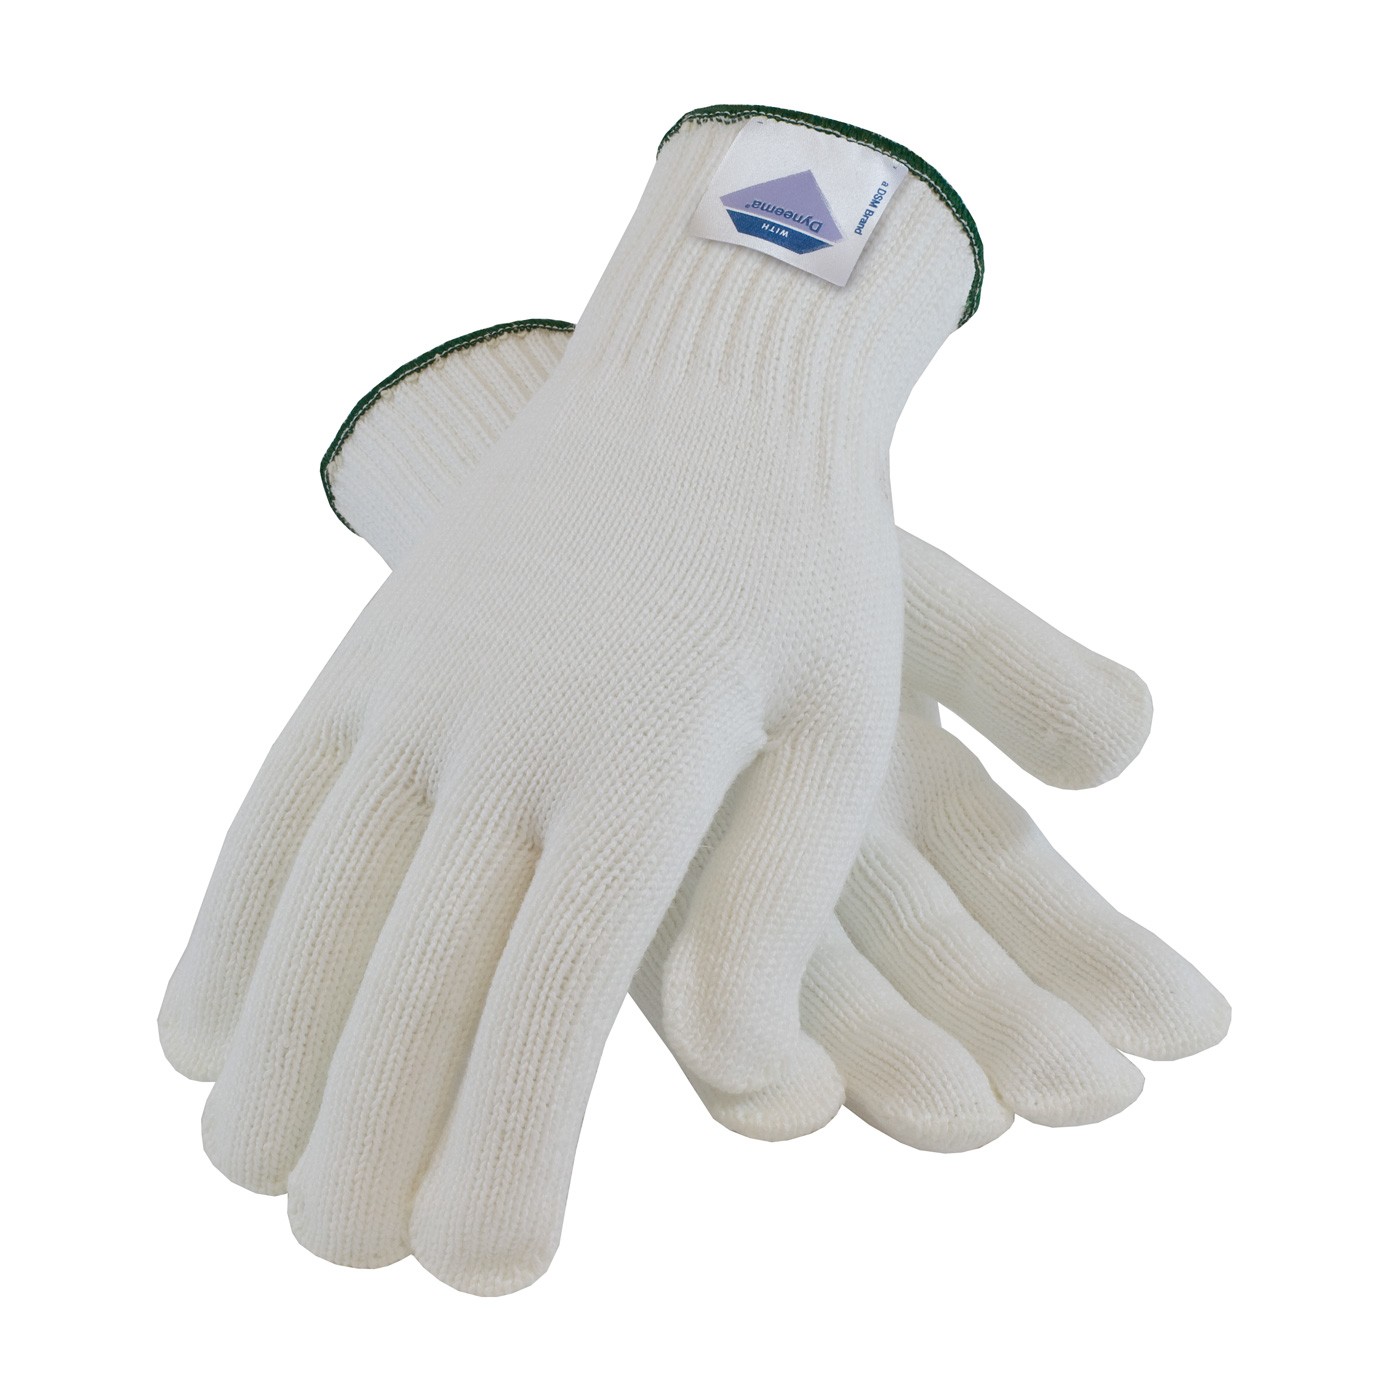 Gloves with Spun Dyneema, 7 Gauge, White, Heavy Weight, ANSI2 Size Medium